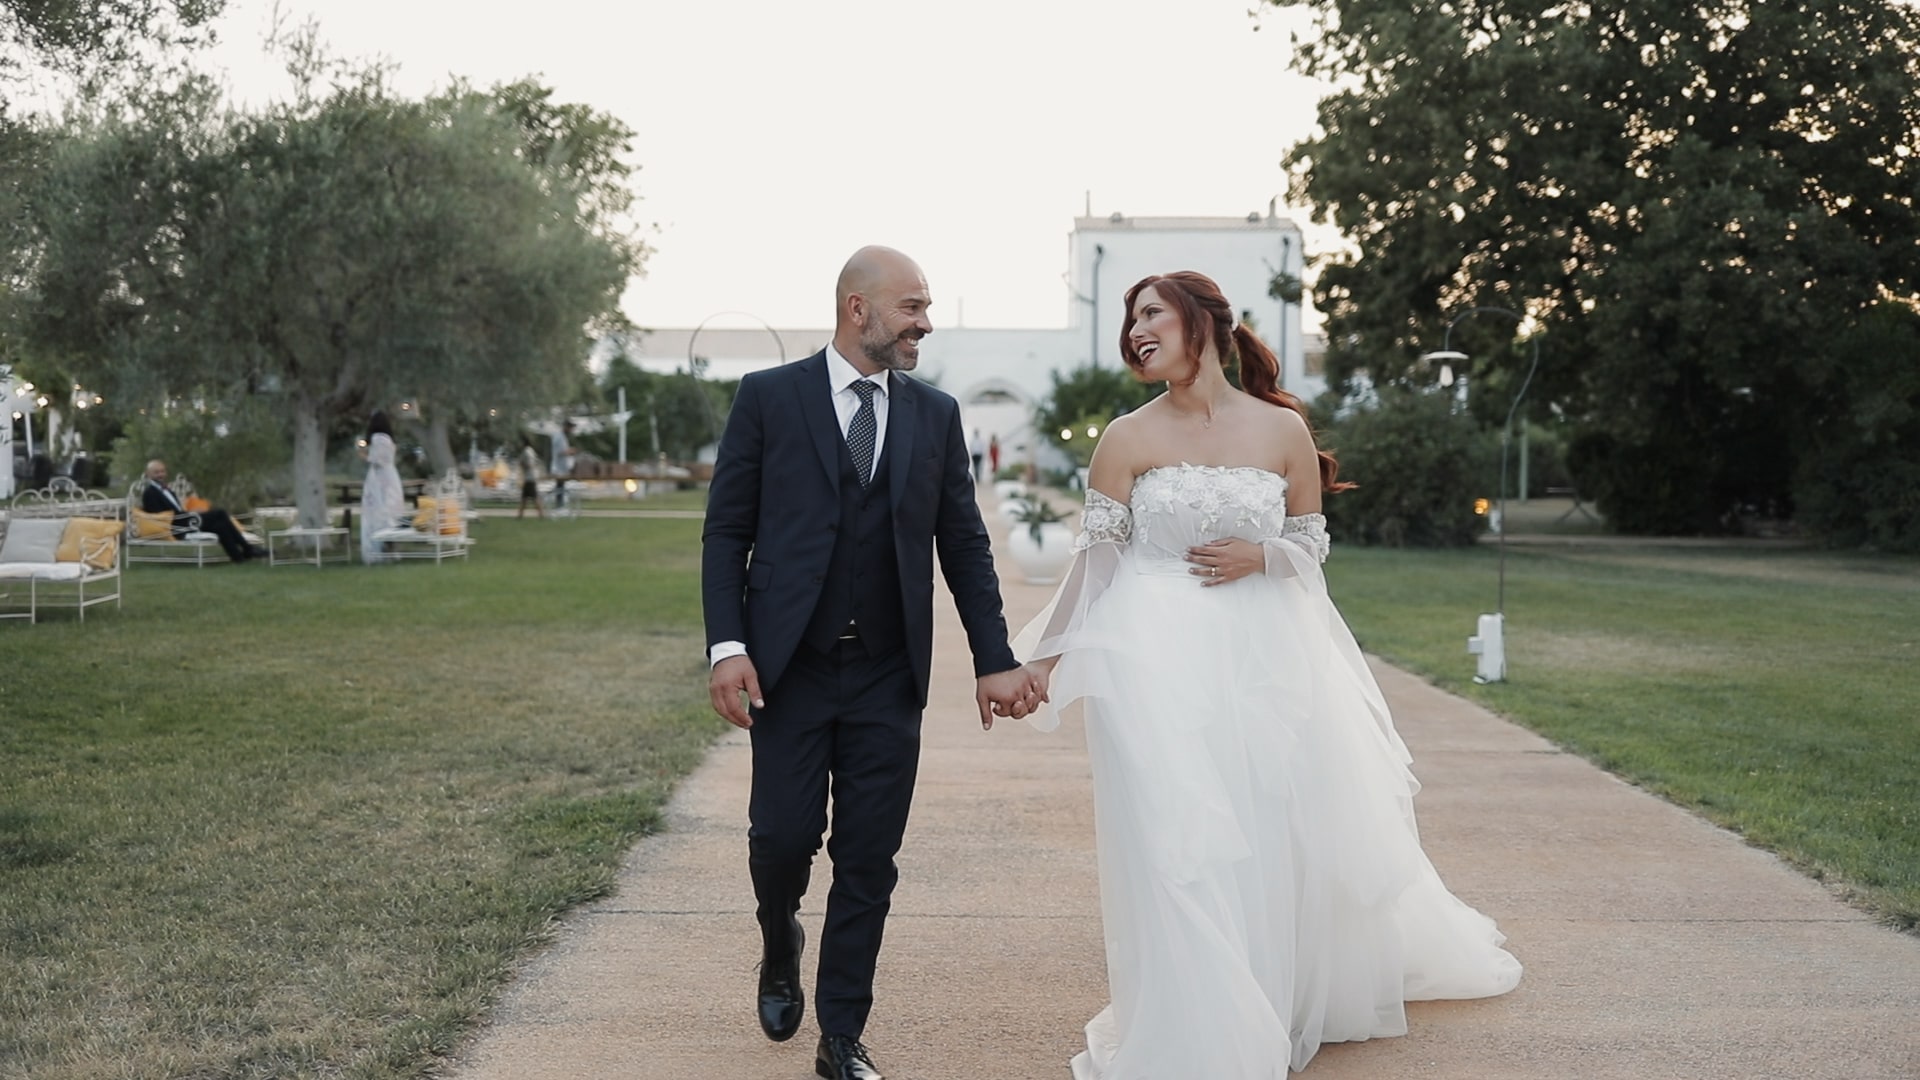 FILM.00_19_30_14.Immagine006-min Wedding in Masseria in Puglia